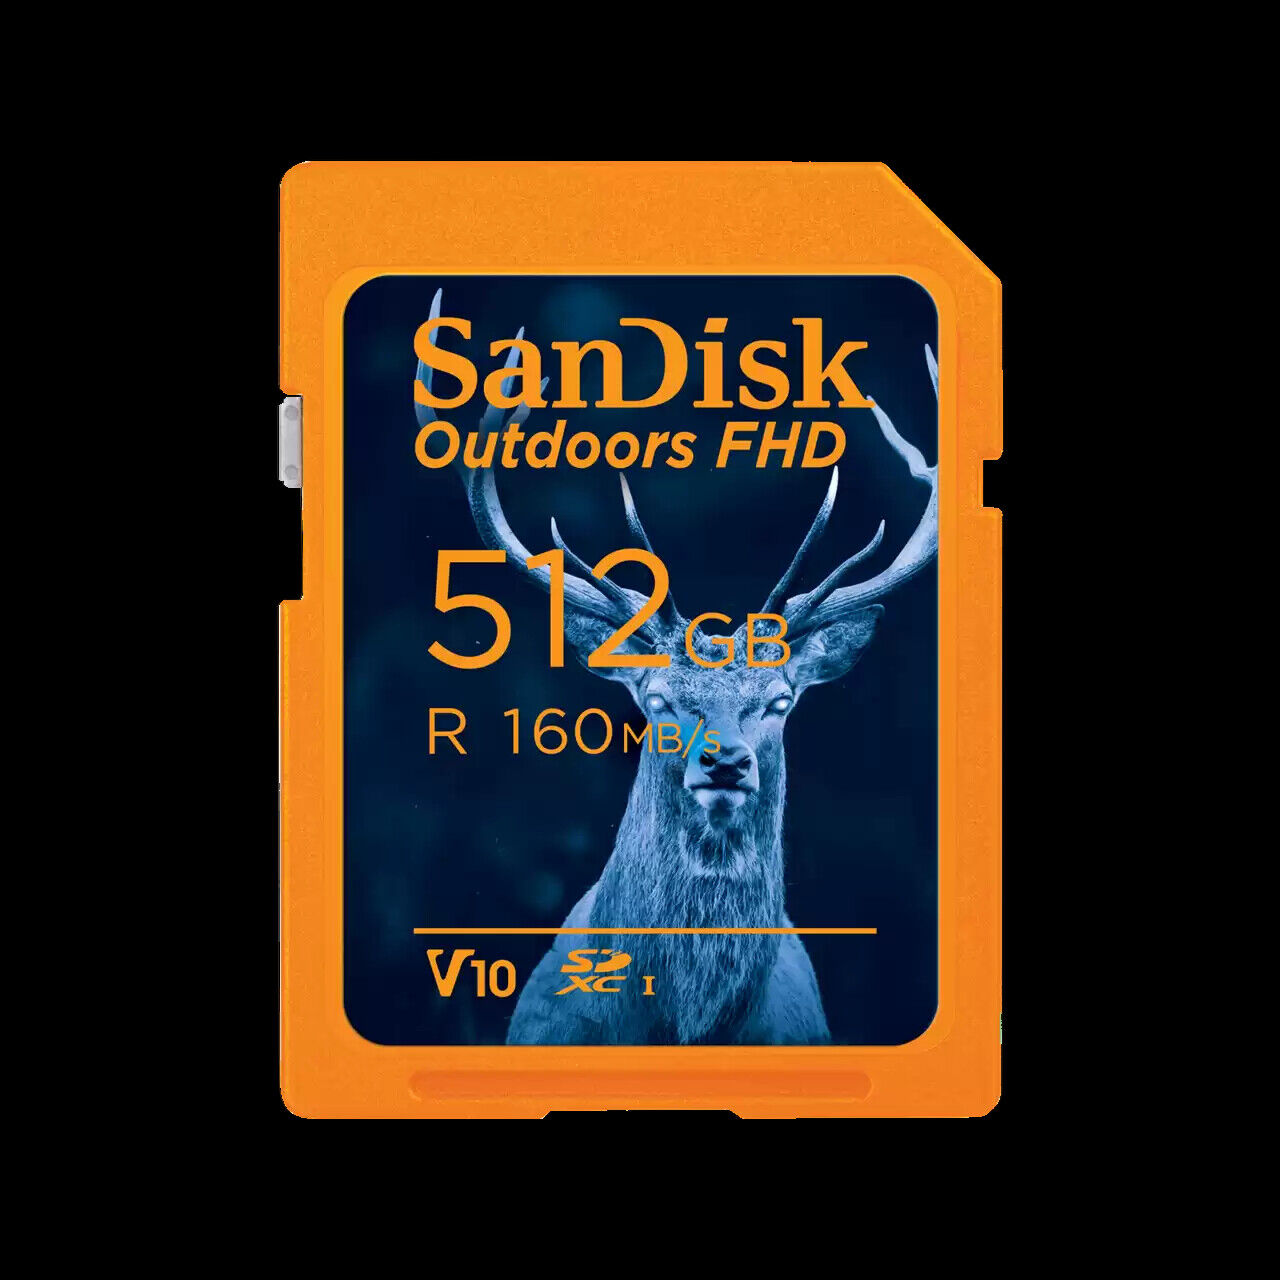 SanDisk 512GB Outdoors FHD microSDXC UHS-I Memory Card - SDSDUWL-512G-GN6VN